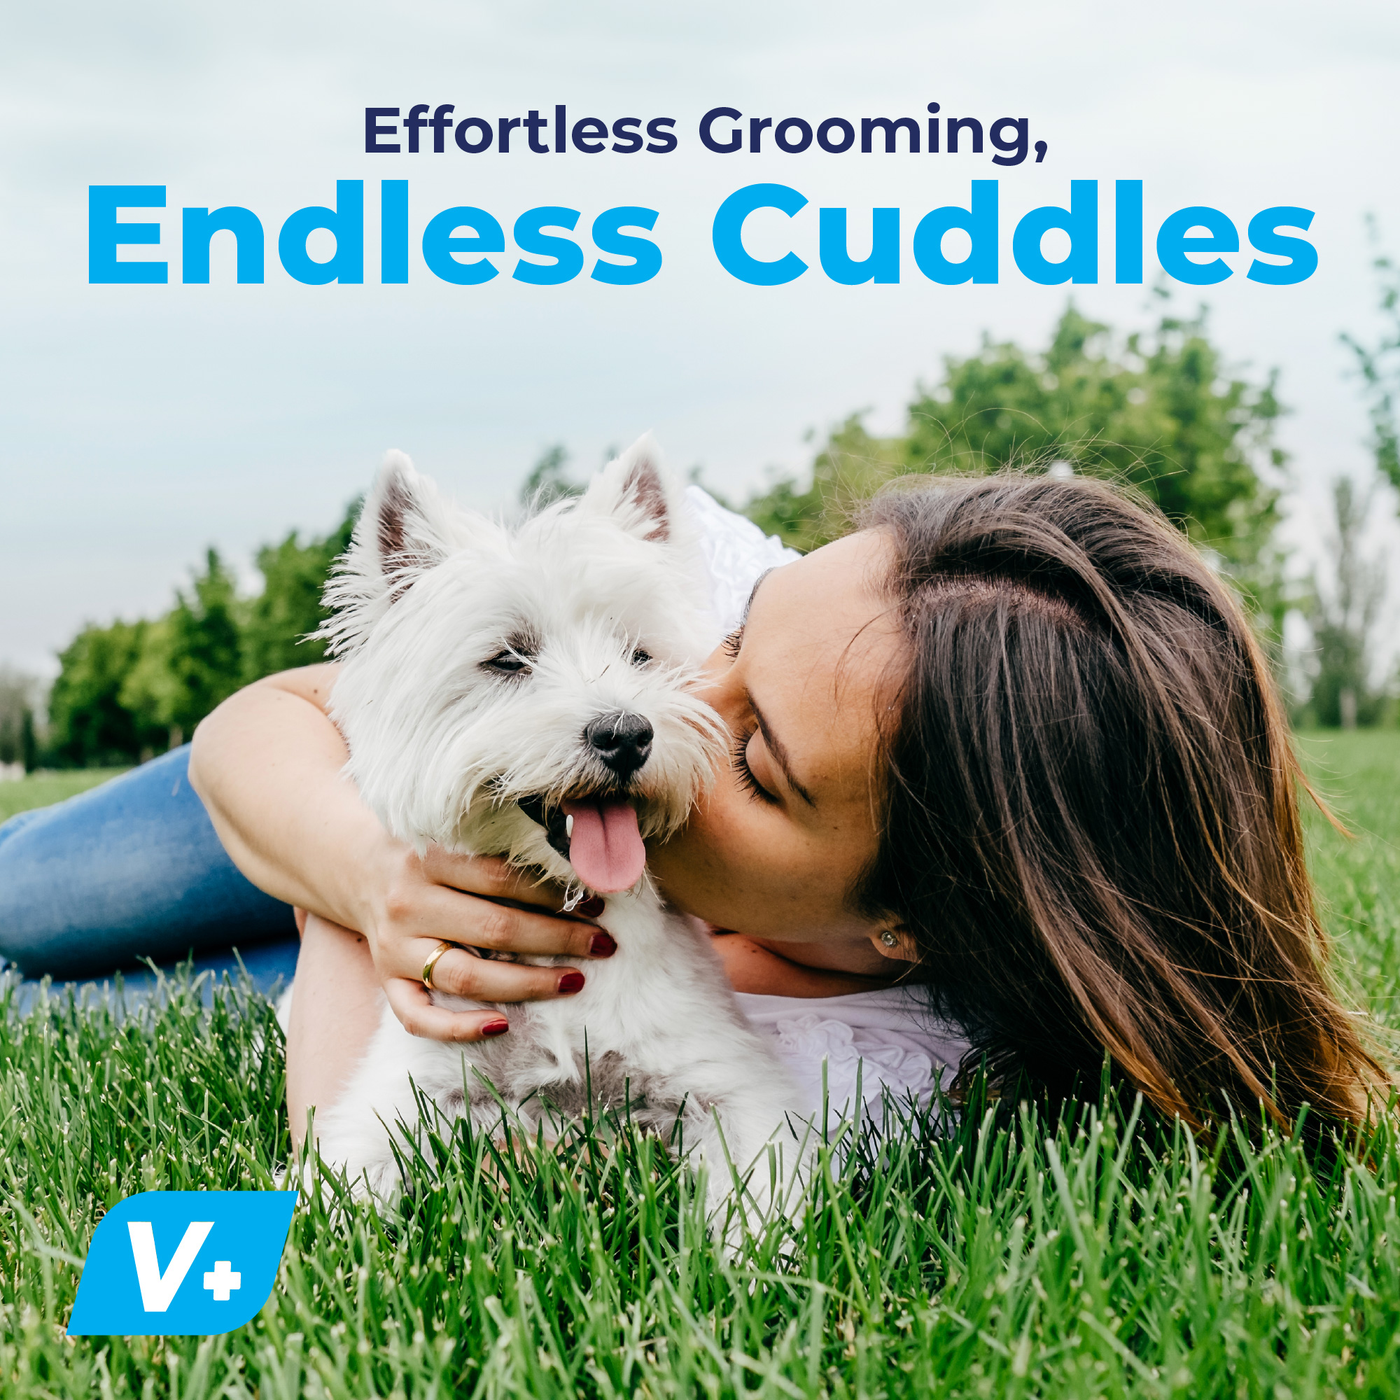 Furbliss® Hygienic Grooming Pet Wipes